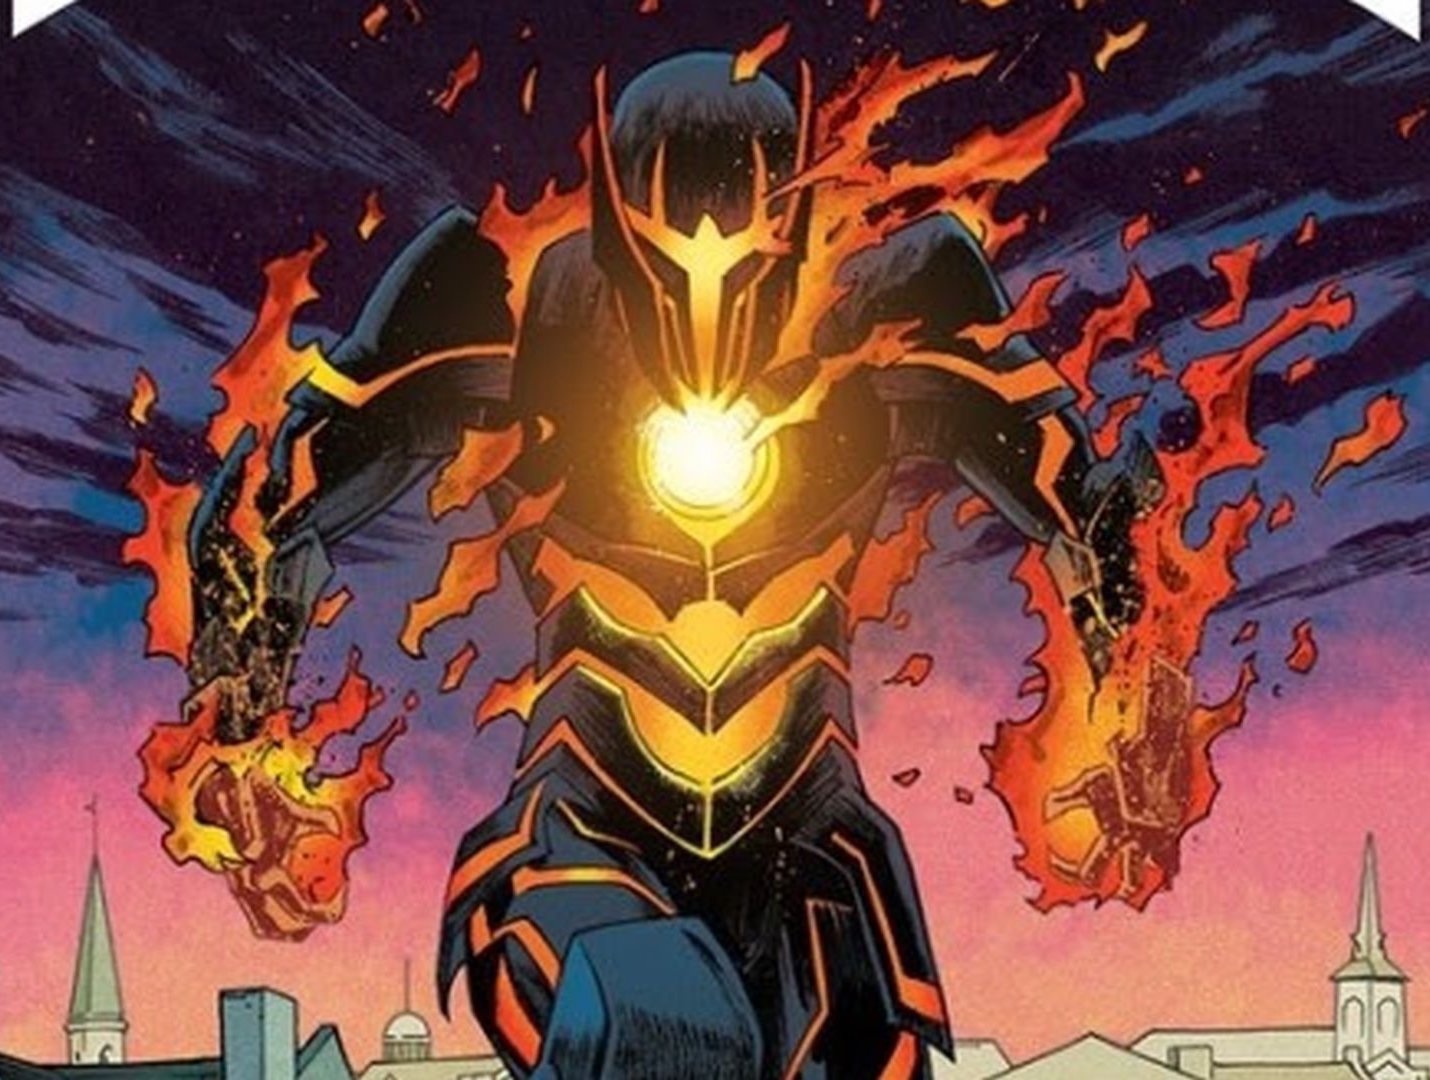 'Rogue Sun' #1 introduces your new favorite superhero